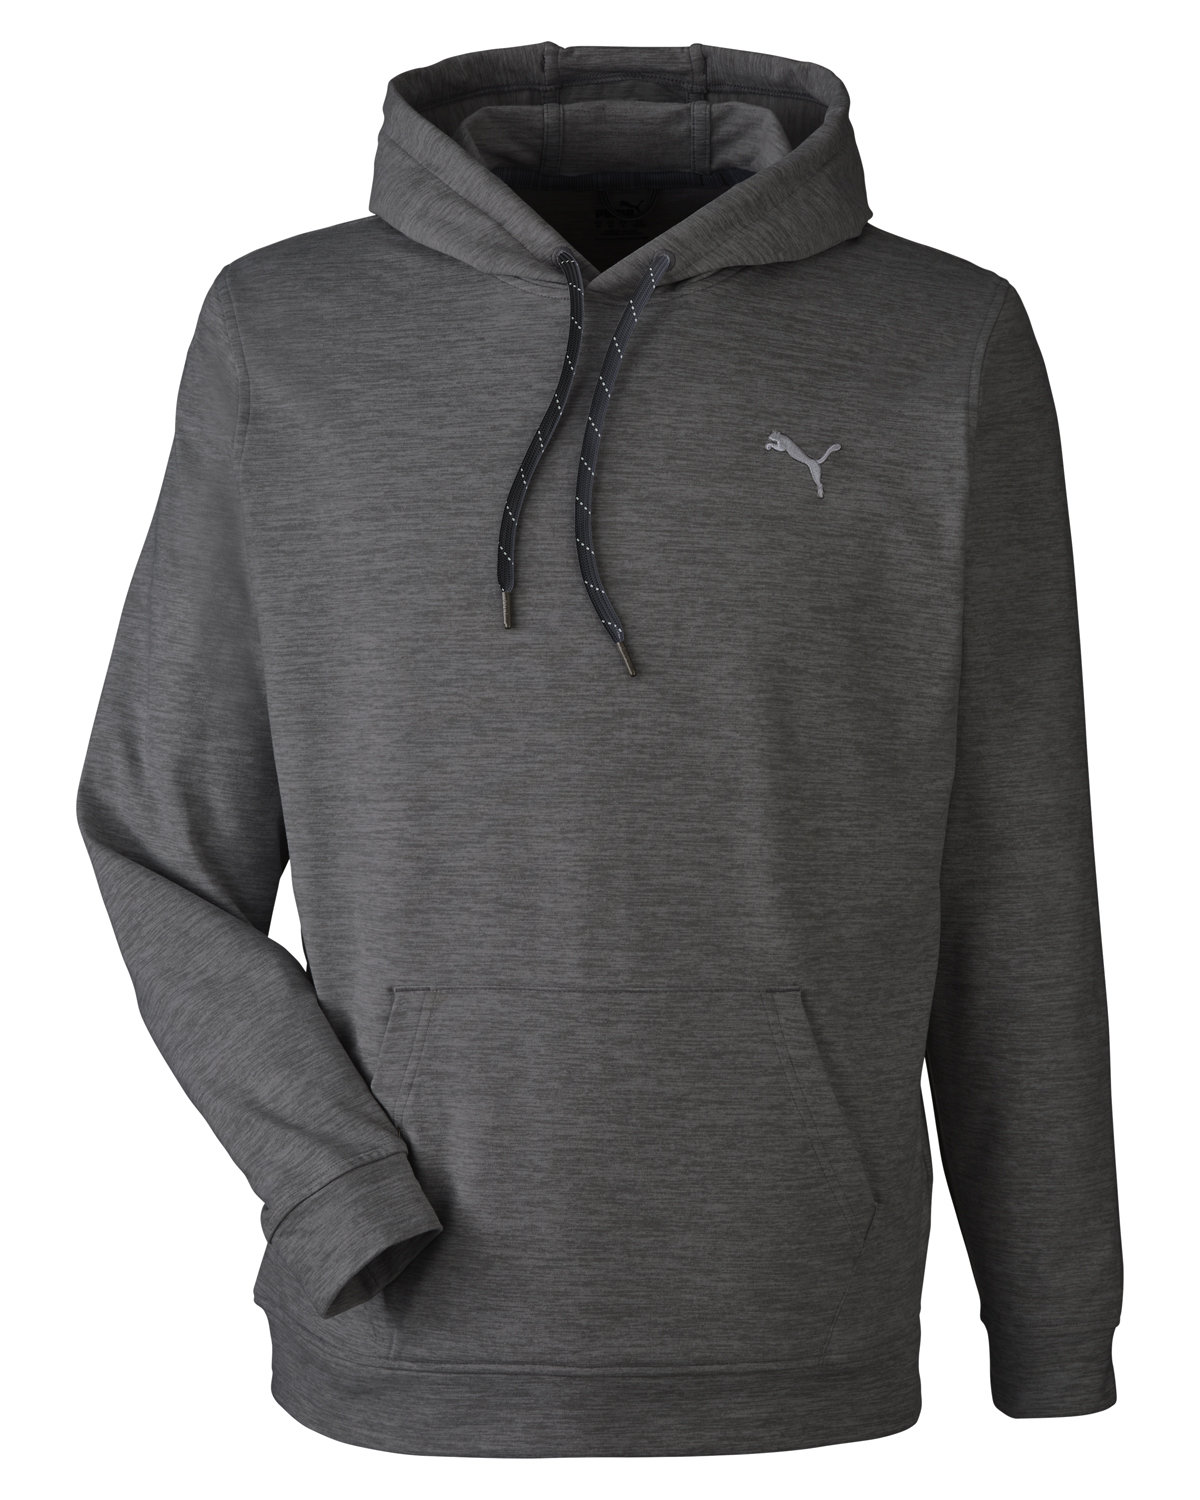 Puma 534527 - Men's Cloudspun Progress Hooded Golf Sweatshirt